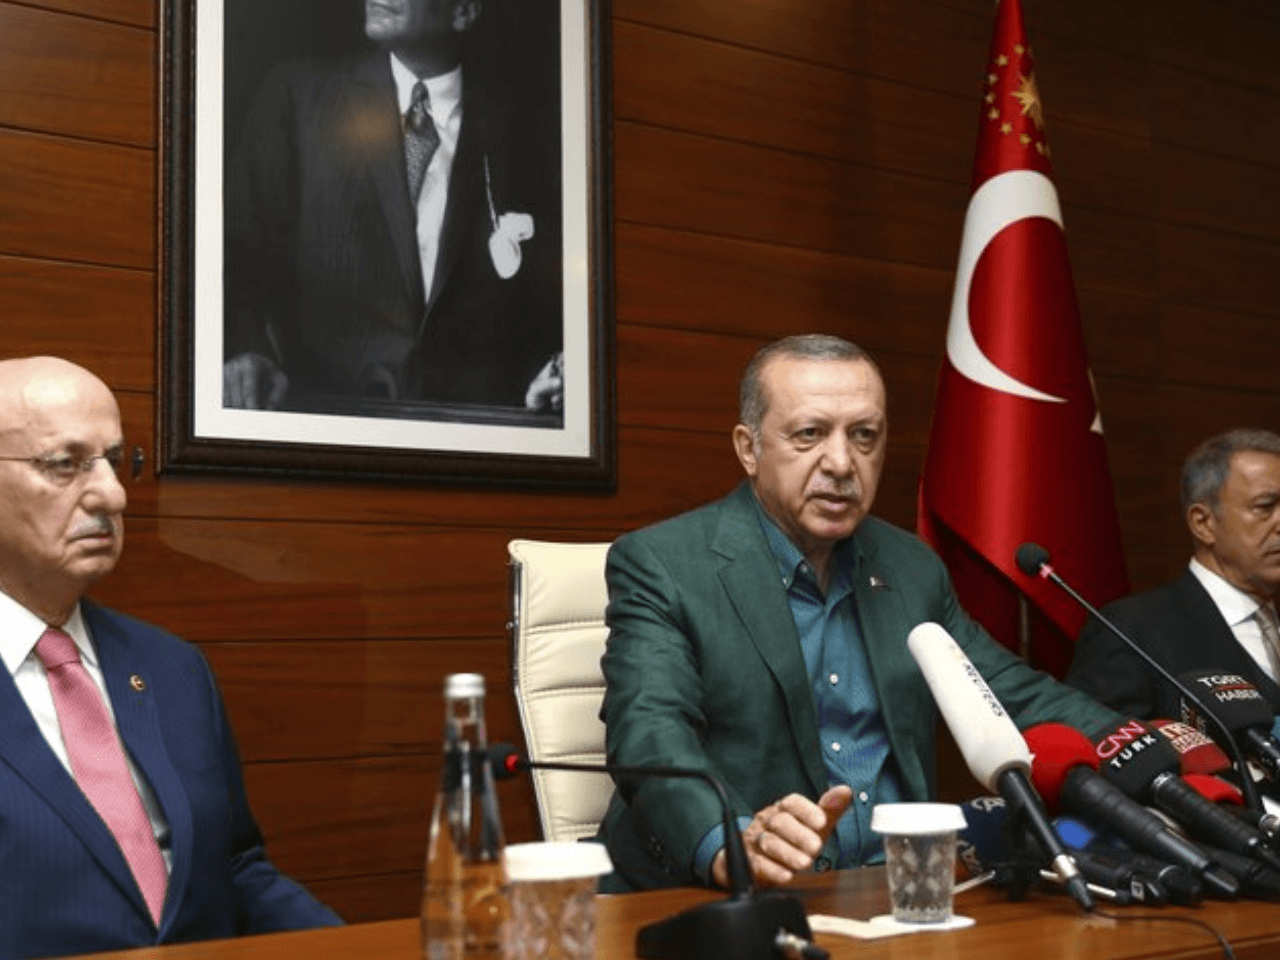 Singer Yusuf Islam meets Erdoğan, Turkish officials 